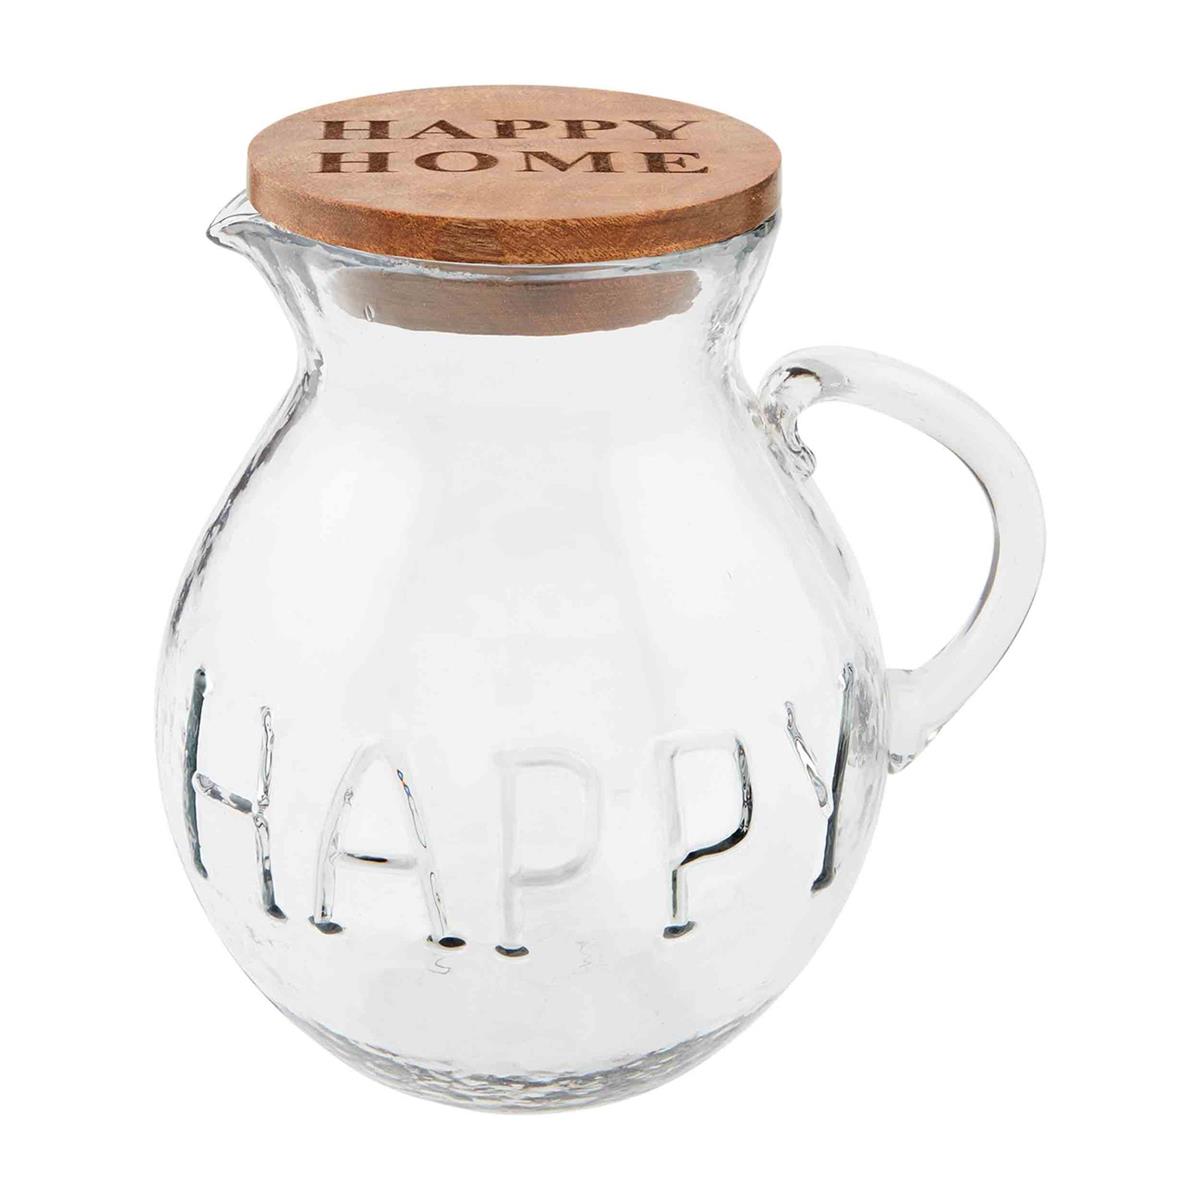 glass pitcher by mud pie that says happy